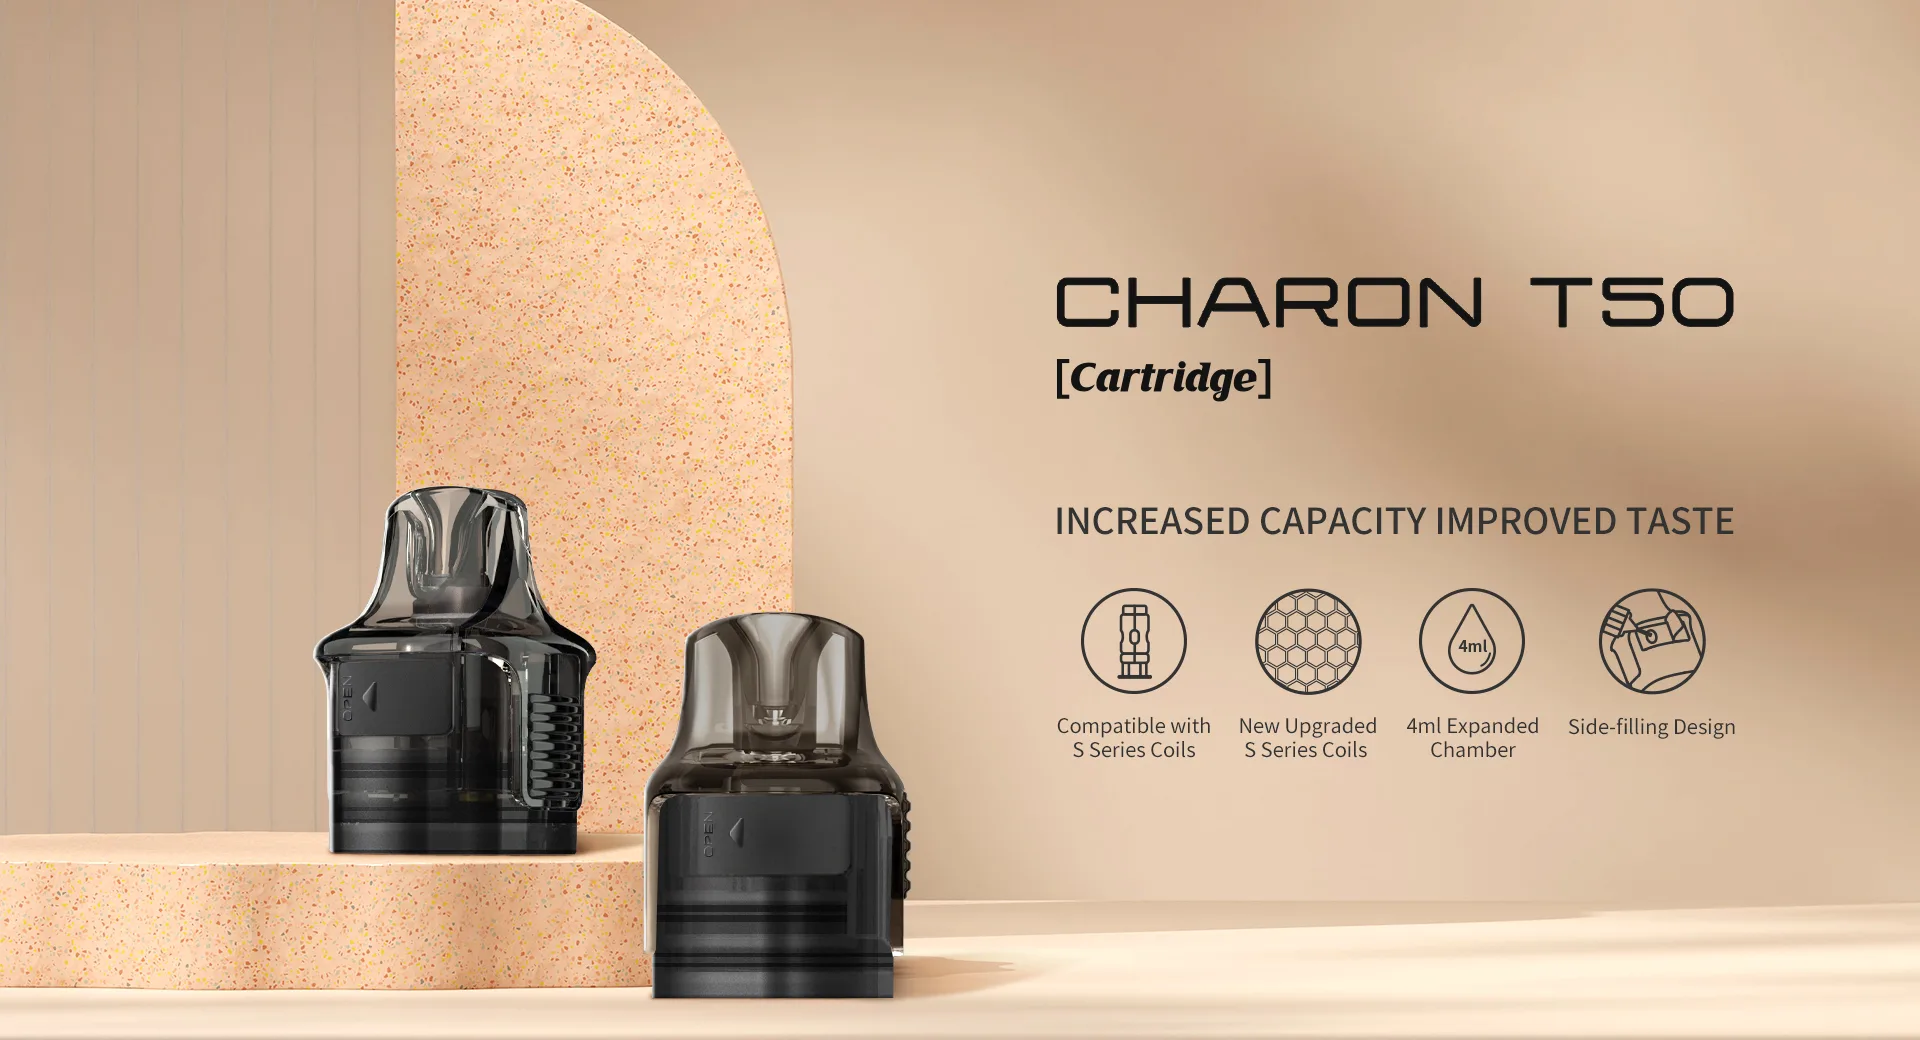 charon t50 Cartridge